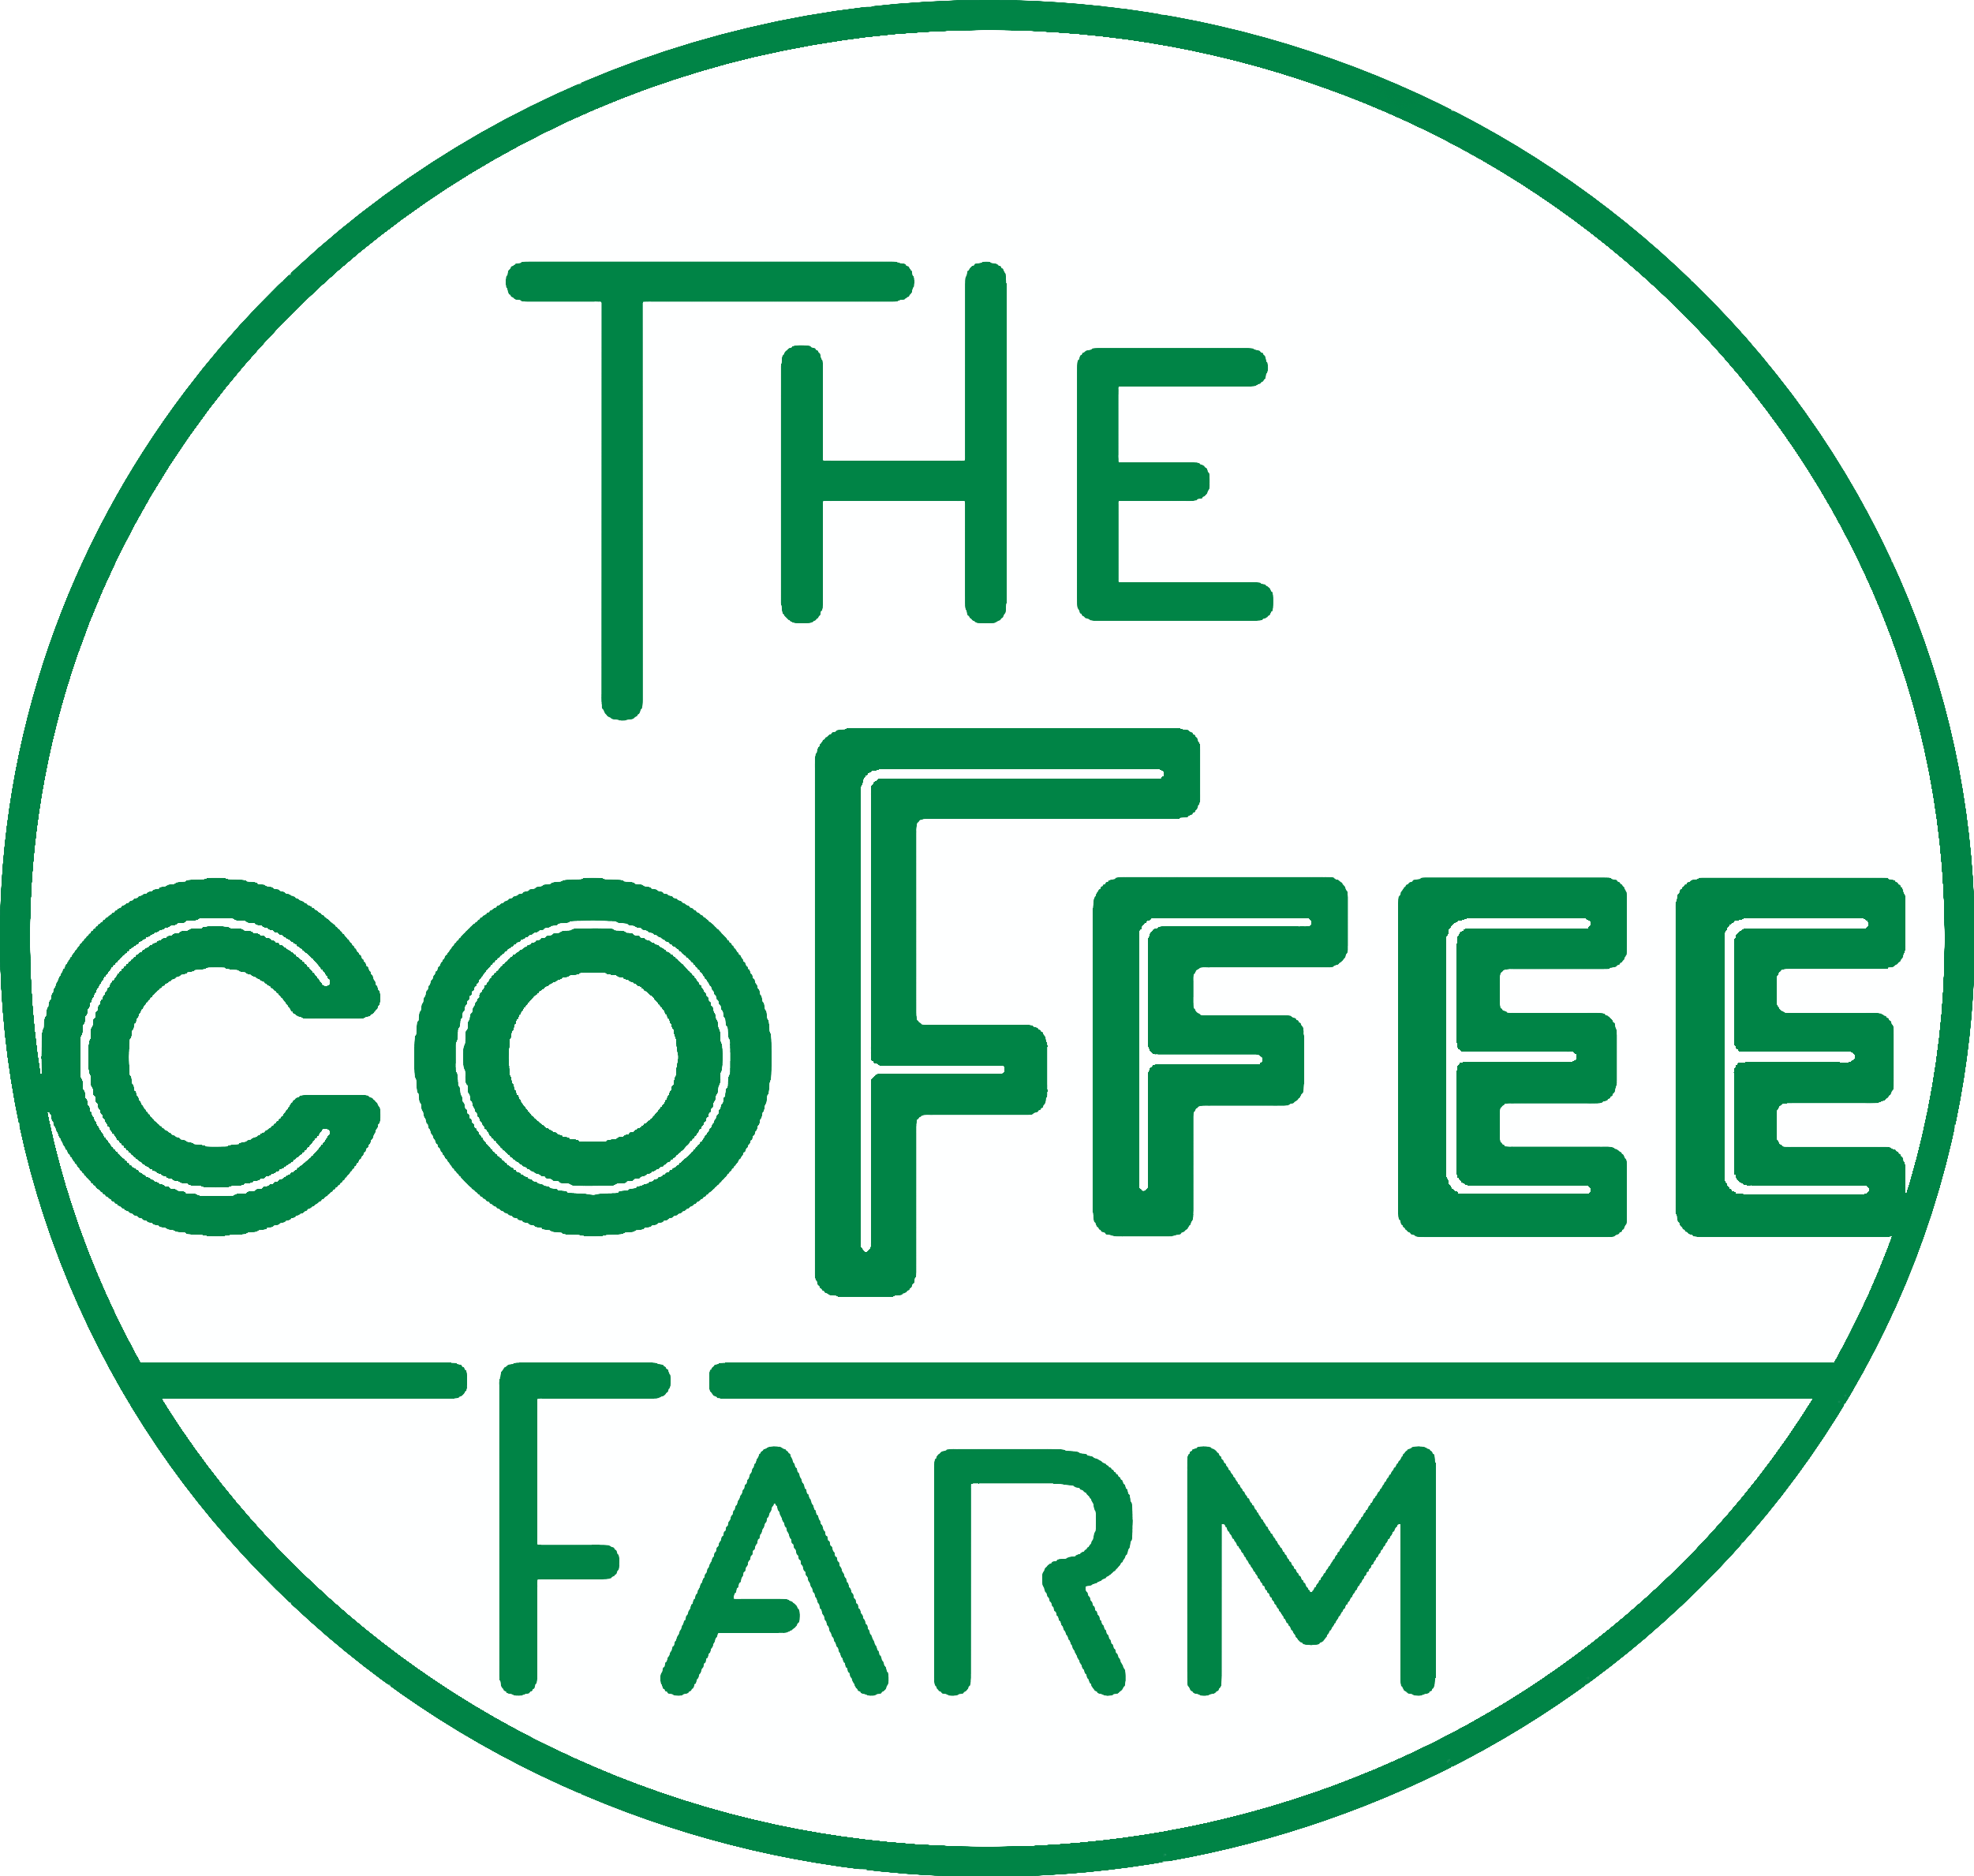 The Coffee Farm